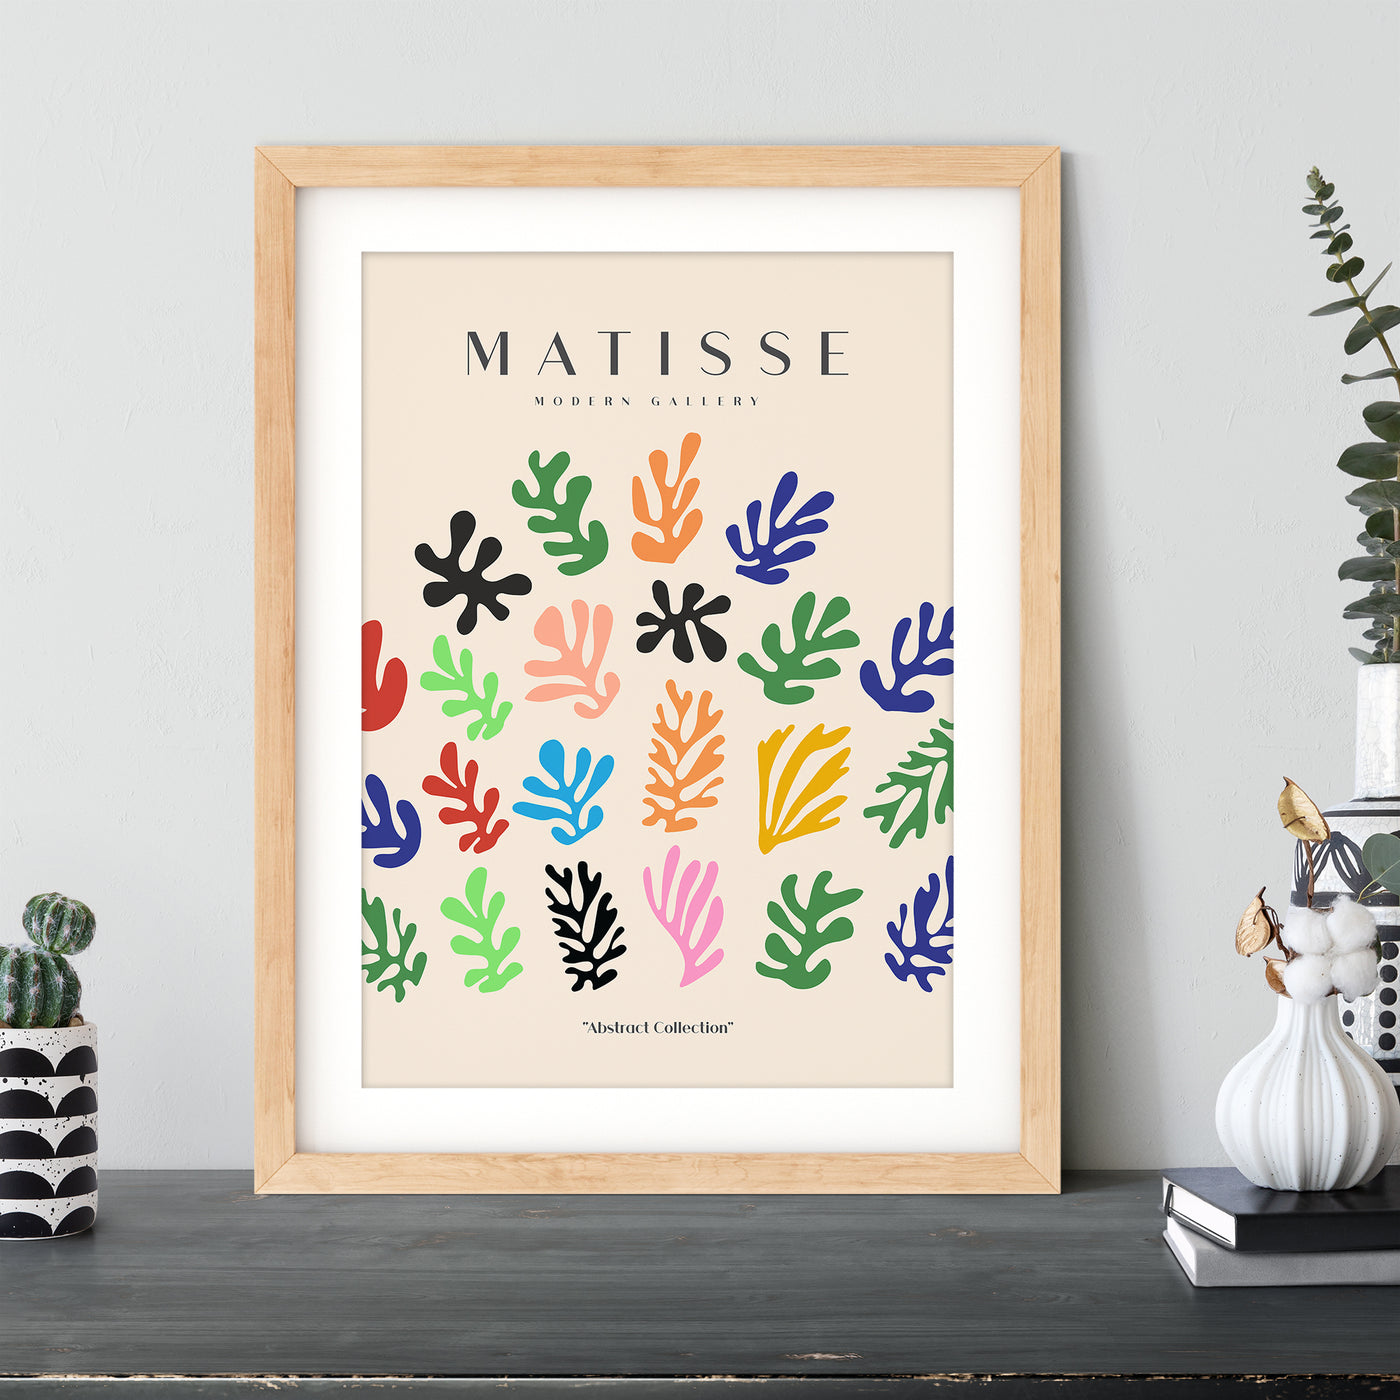 Henri Matisse - #19